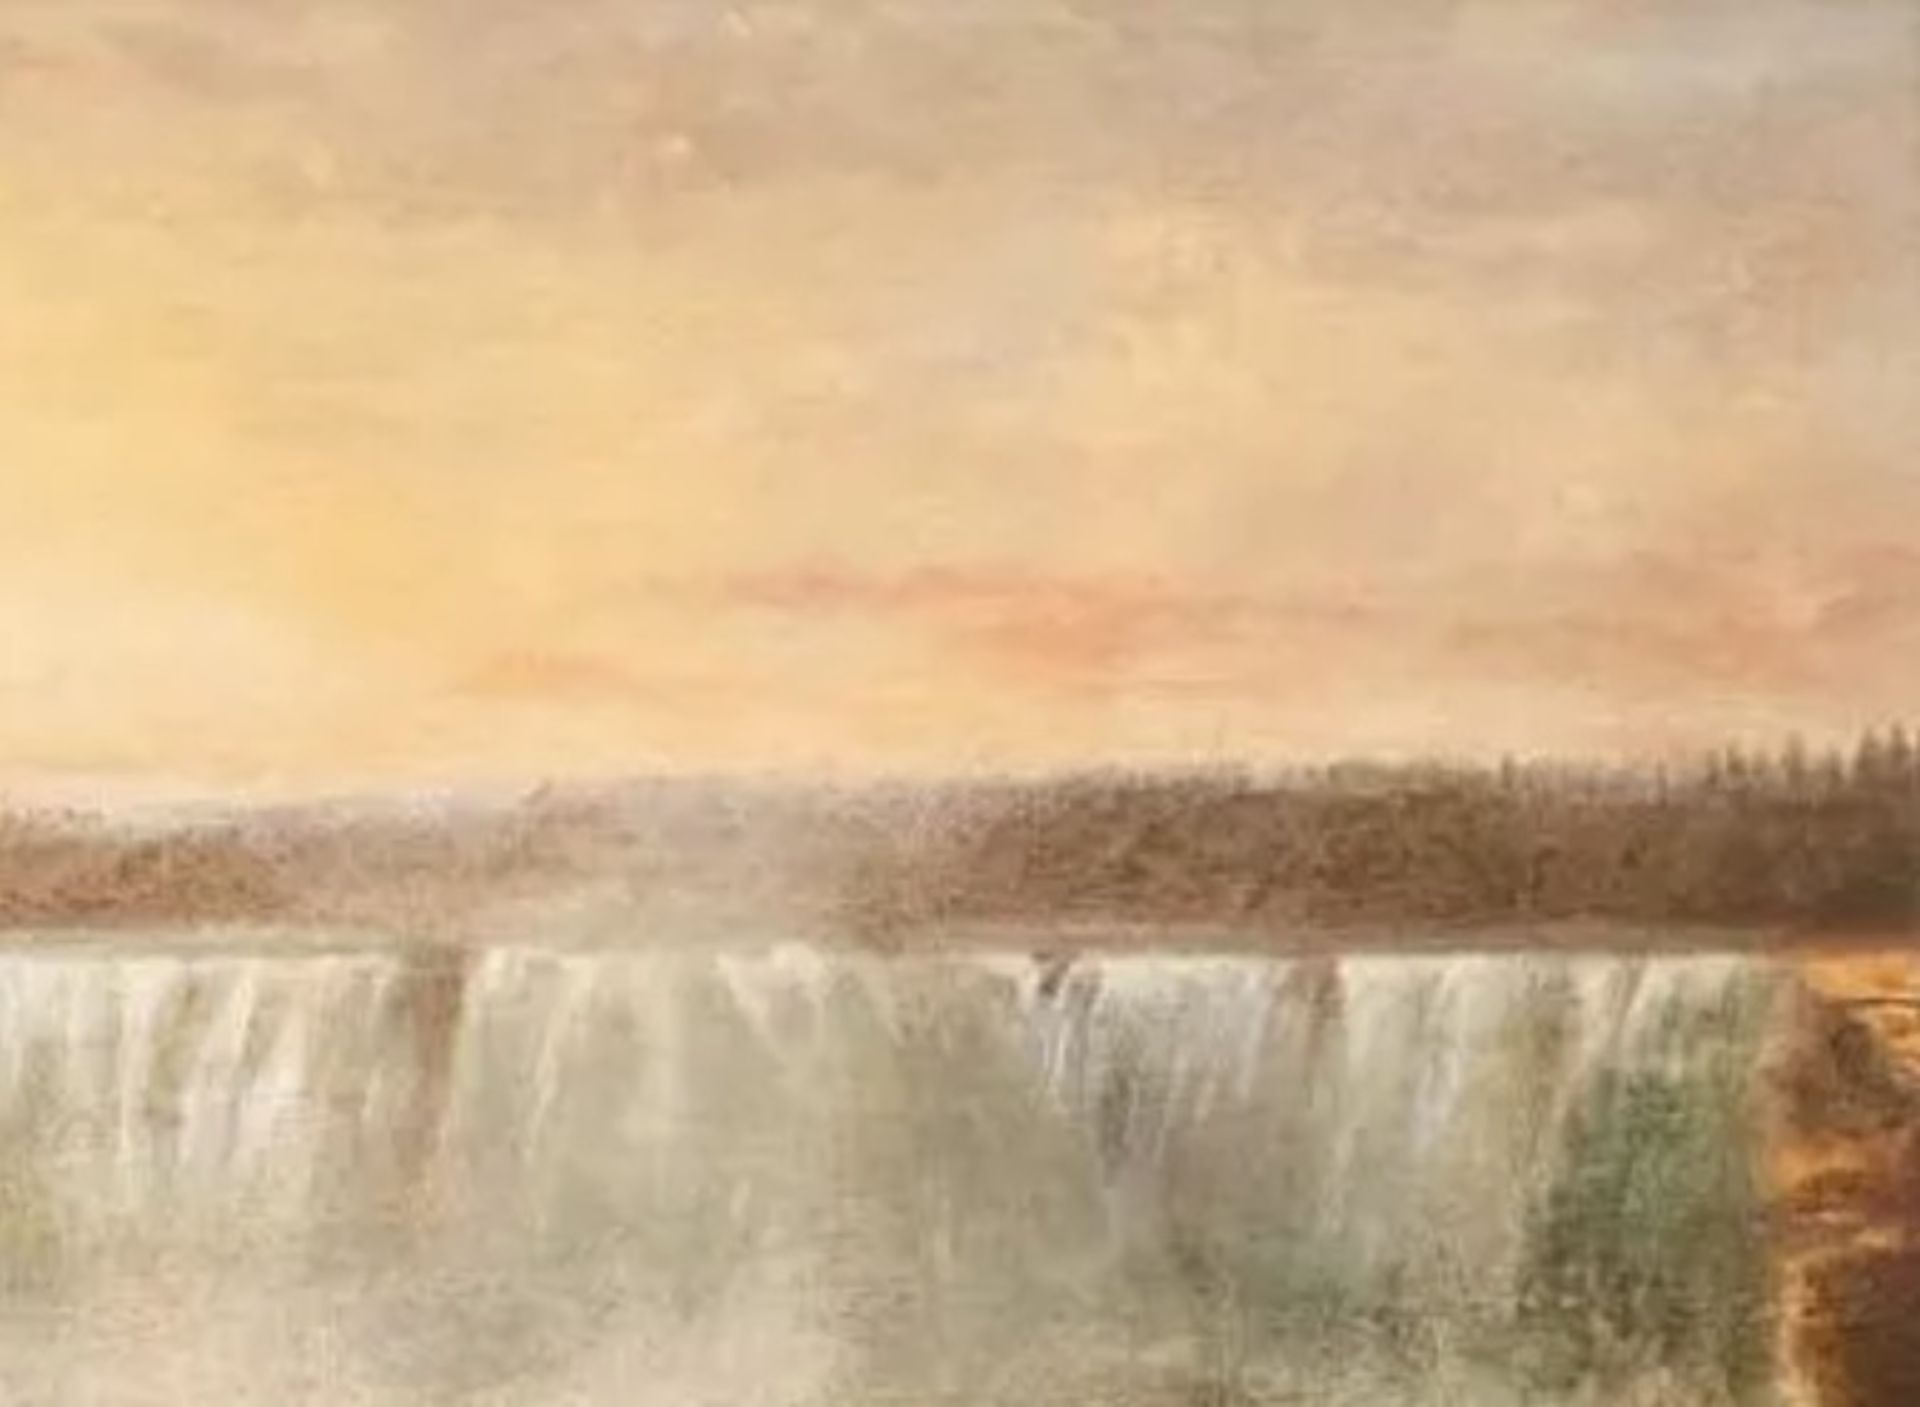 Albert Bierstadt "View of Niagara" Oil Painting, After - Image 3 of 5